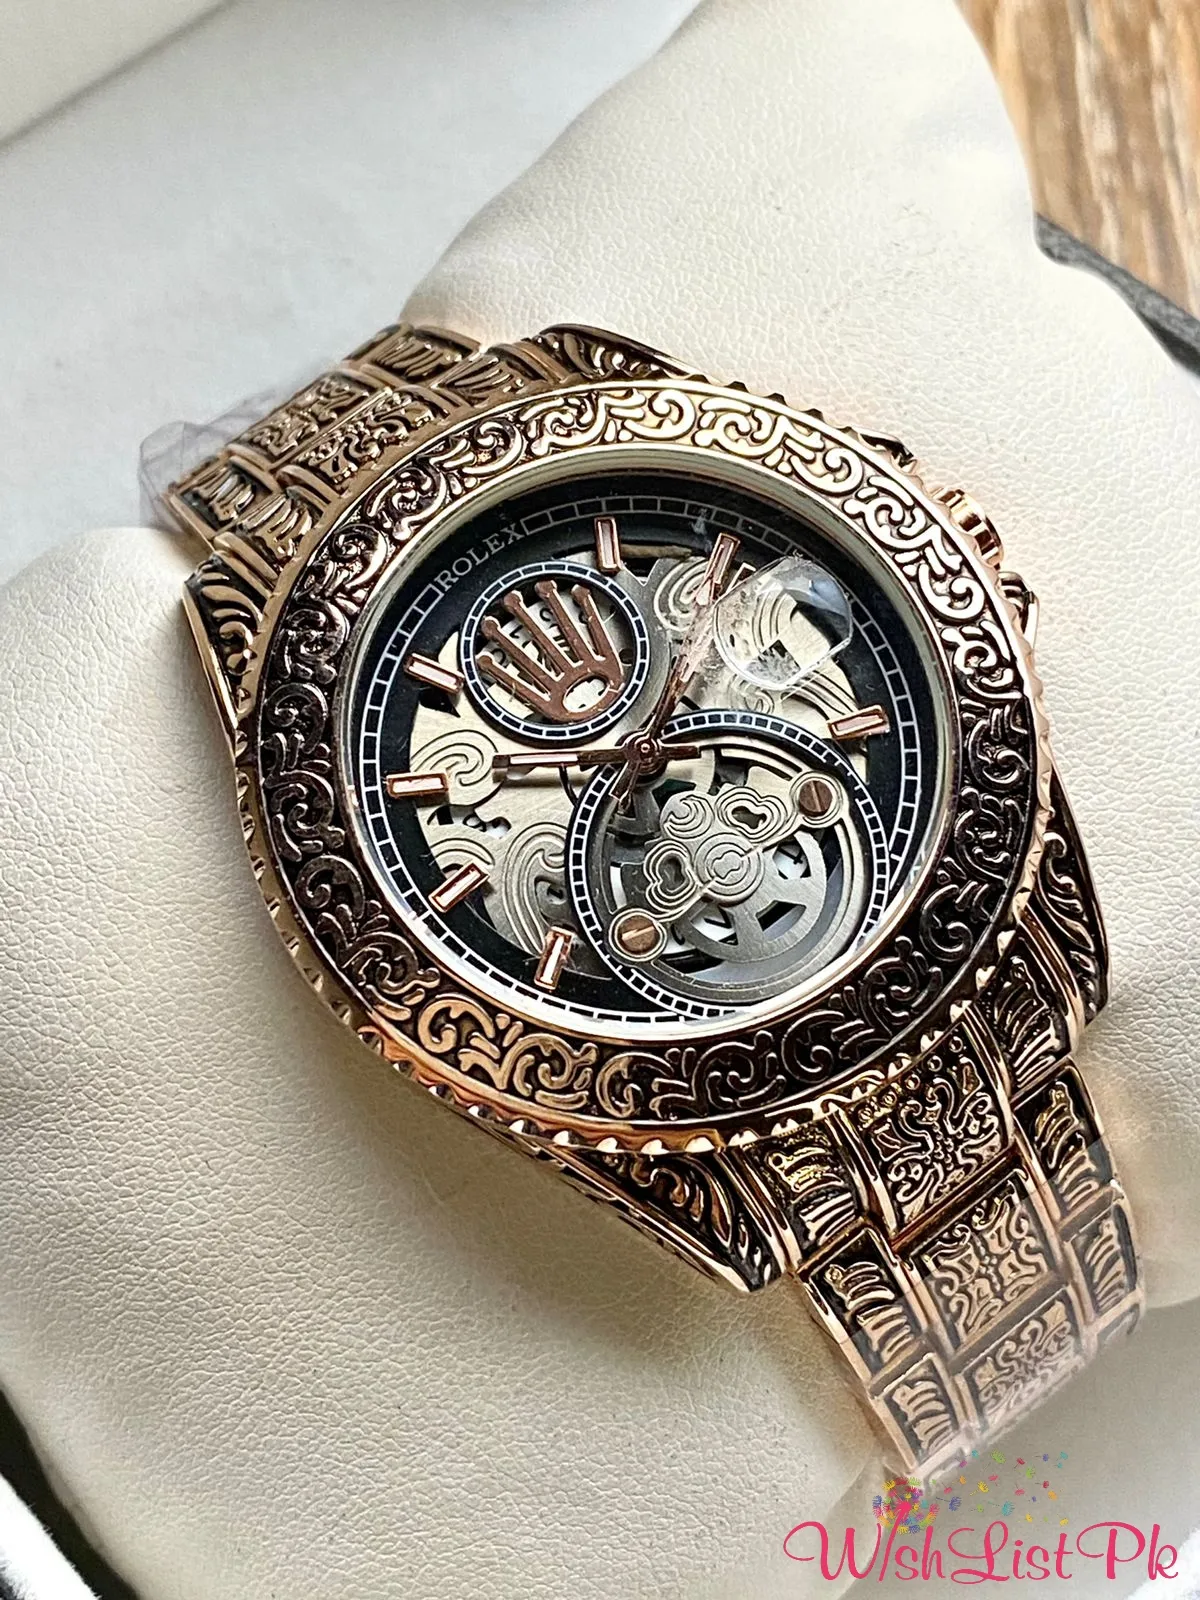 Rolex Antique Rosegold Engraved Watch